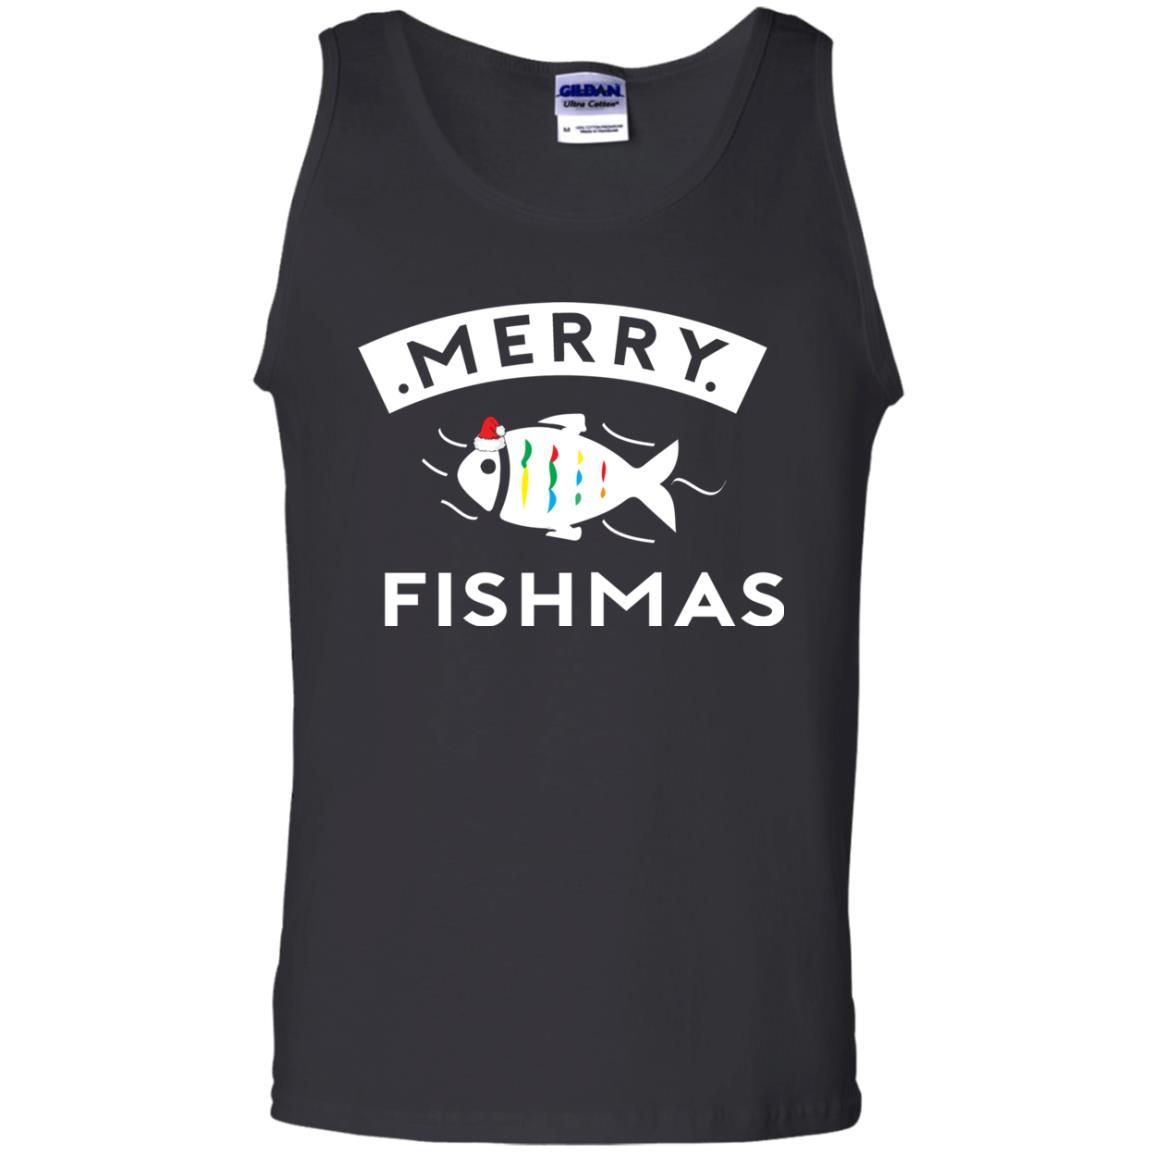 Merry Christmas Fisherman T-shirt Merry Fishmas